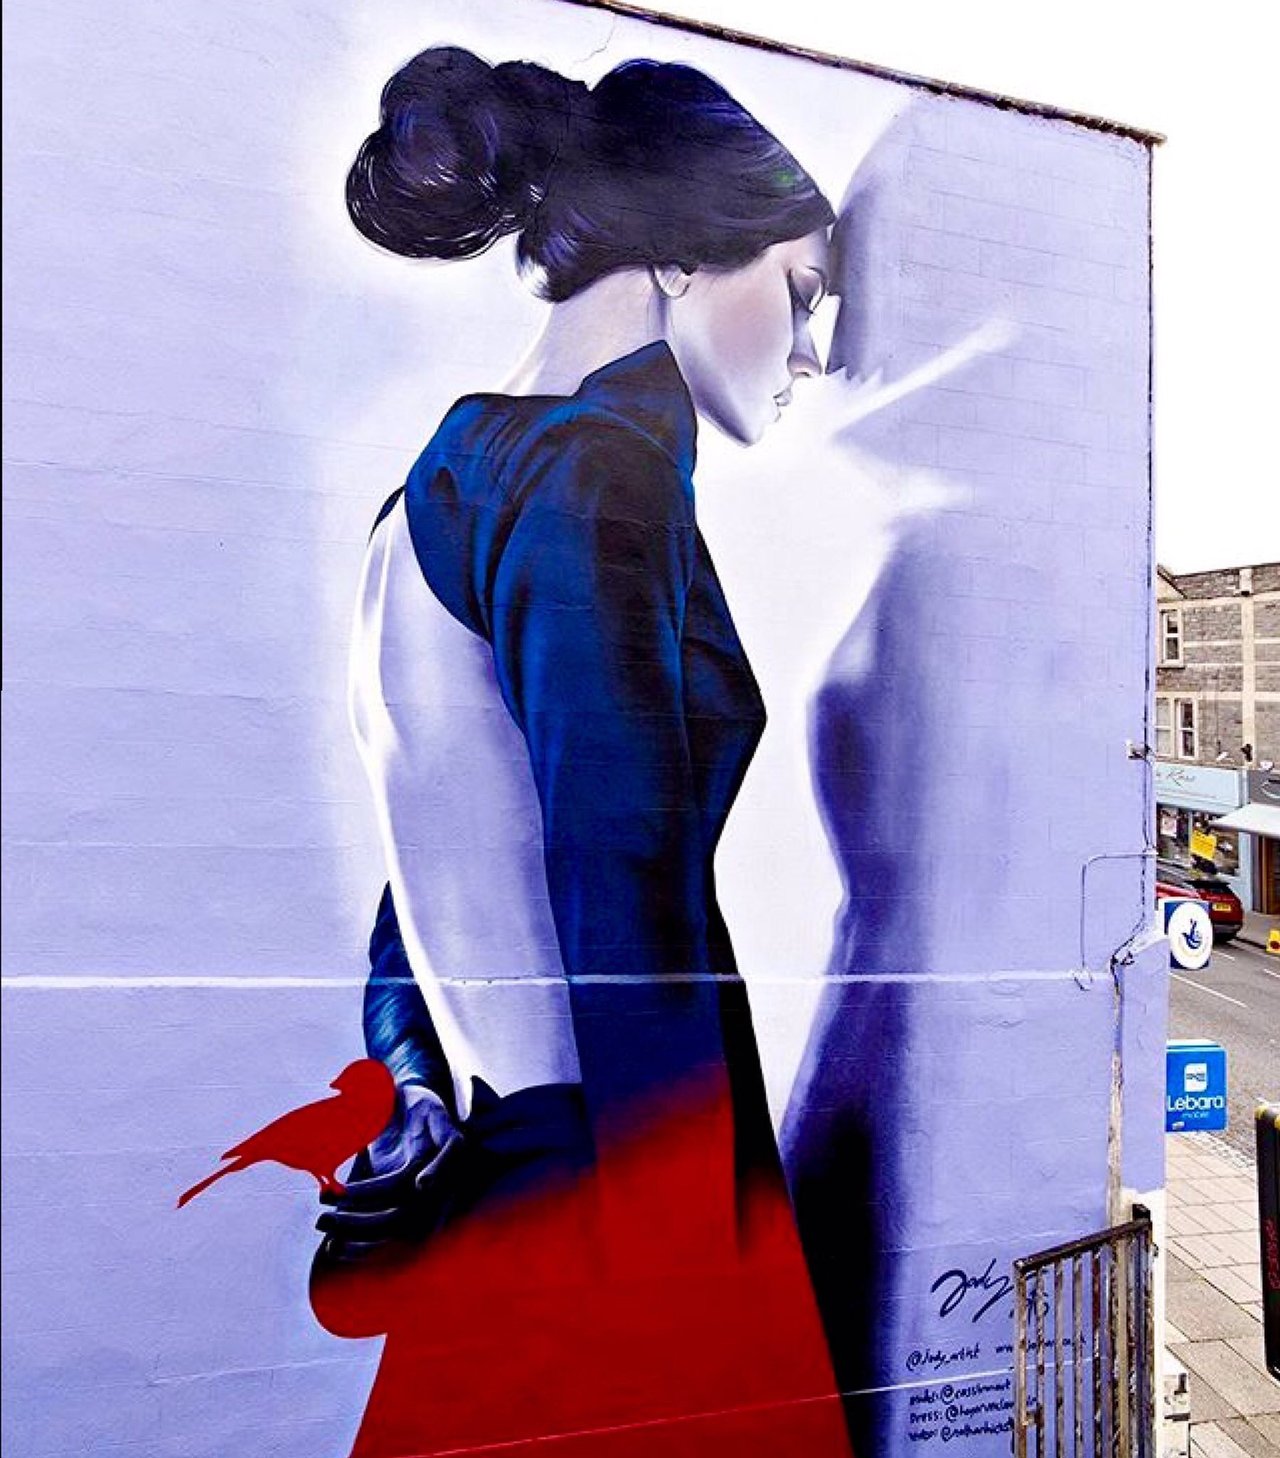 #mural by Jody Thomas #Bristol #England #streetart #art #graffiti https://t.co/A5eD4h20Gu